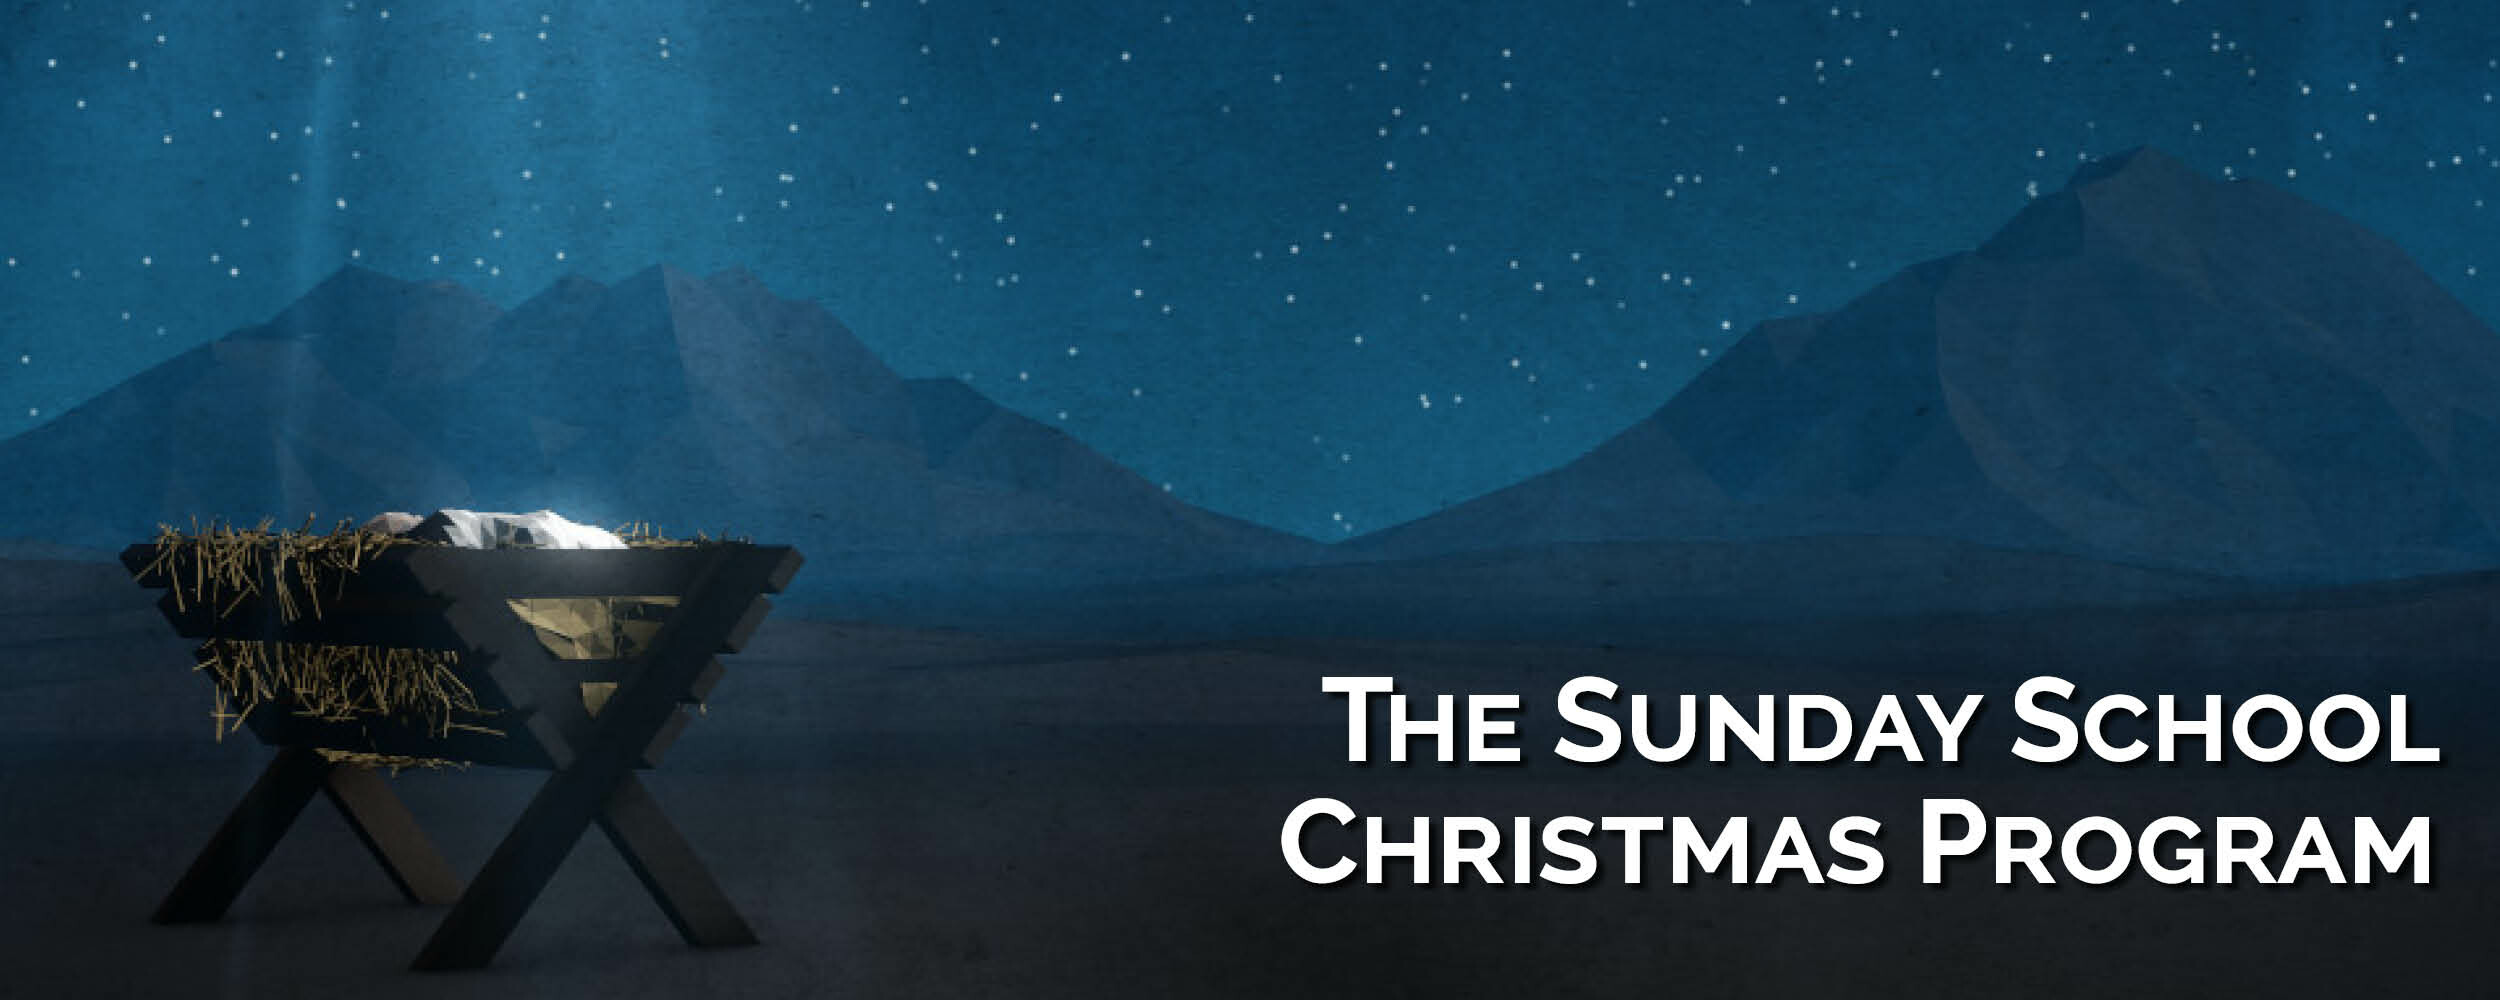 The Sunday School Christmas Program